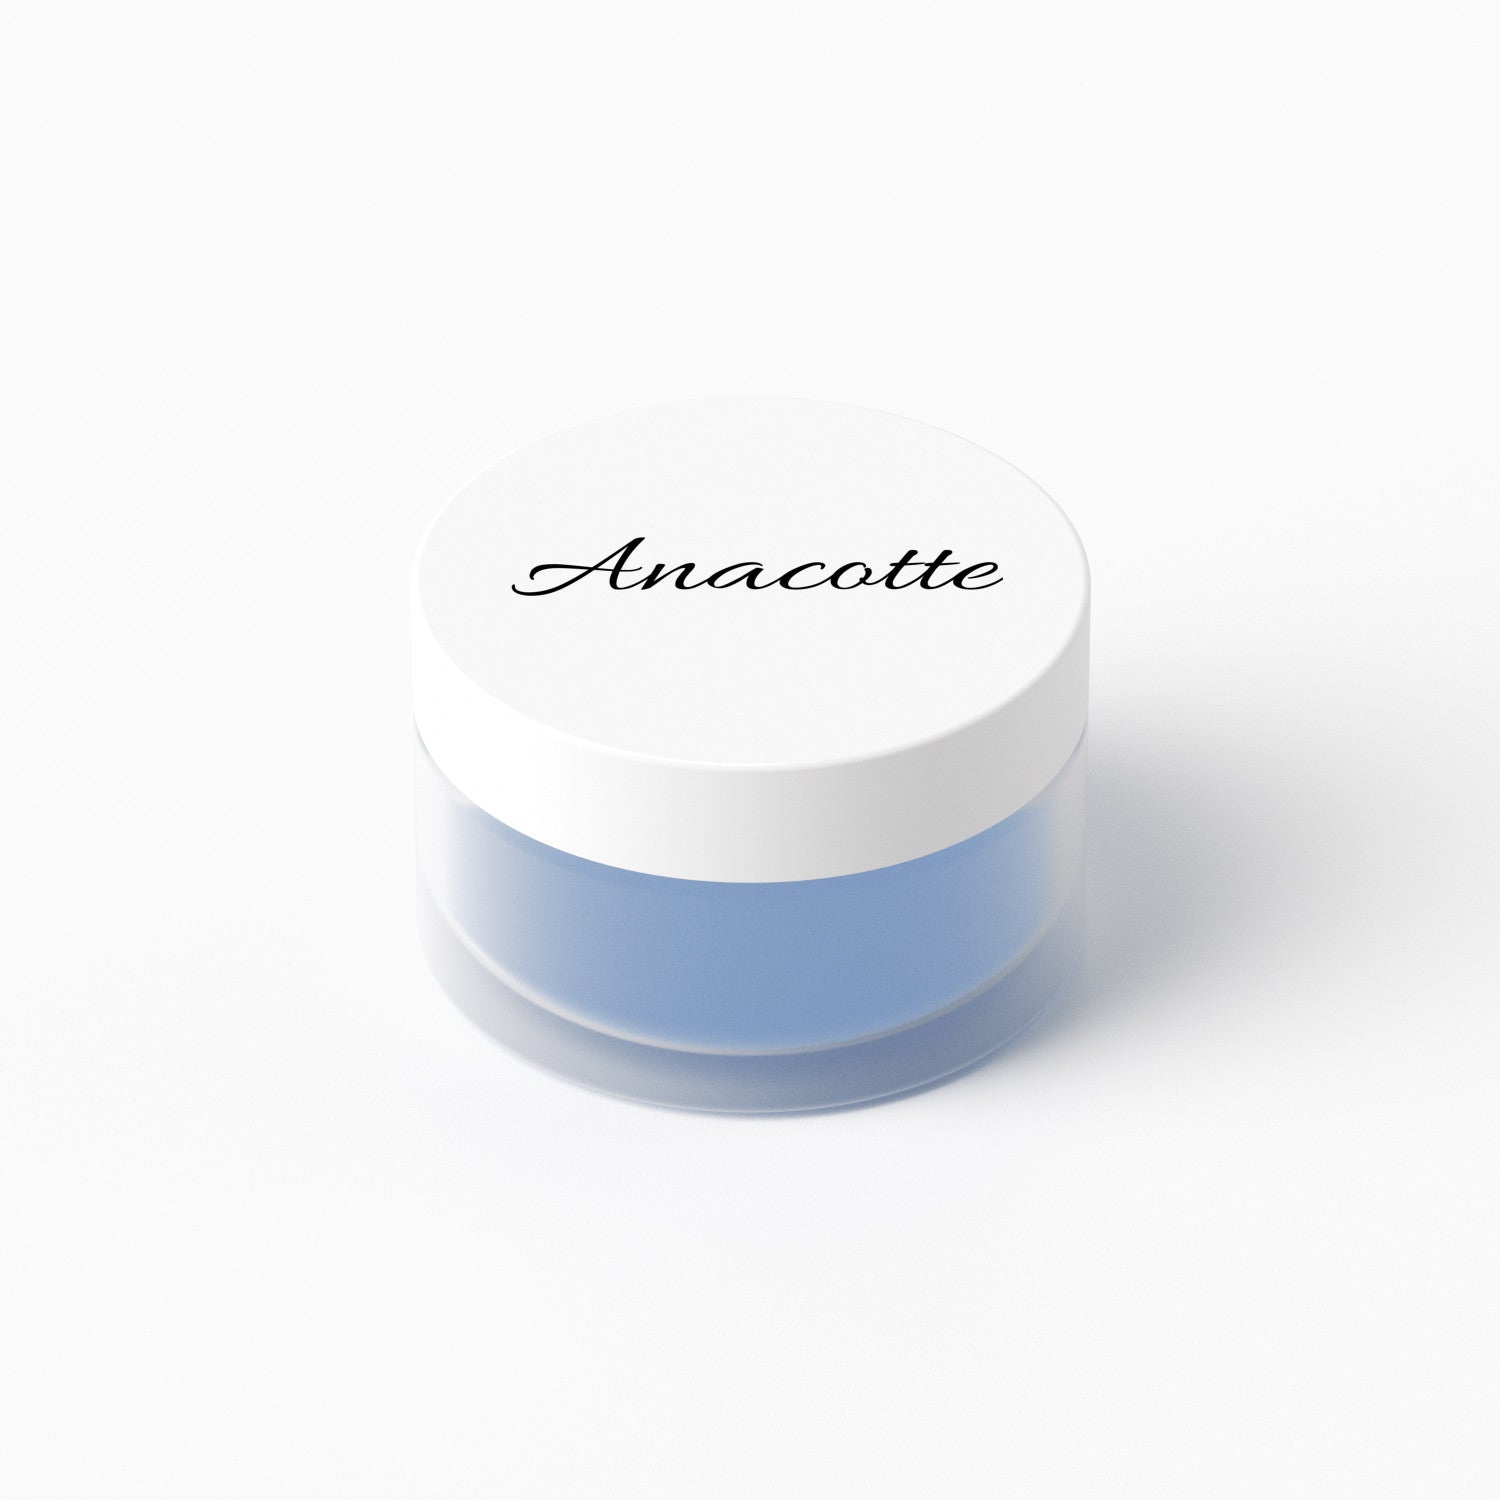 Anacotte Soft Lips Scrub - The Perfect Prep for Luscious, Kissable Lips